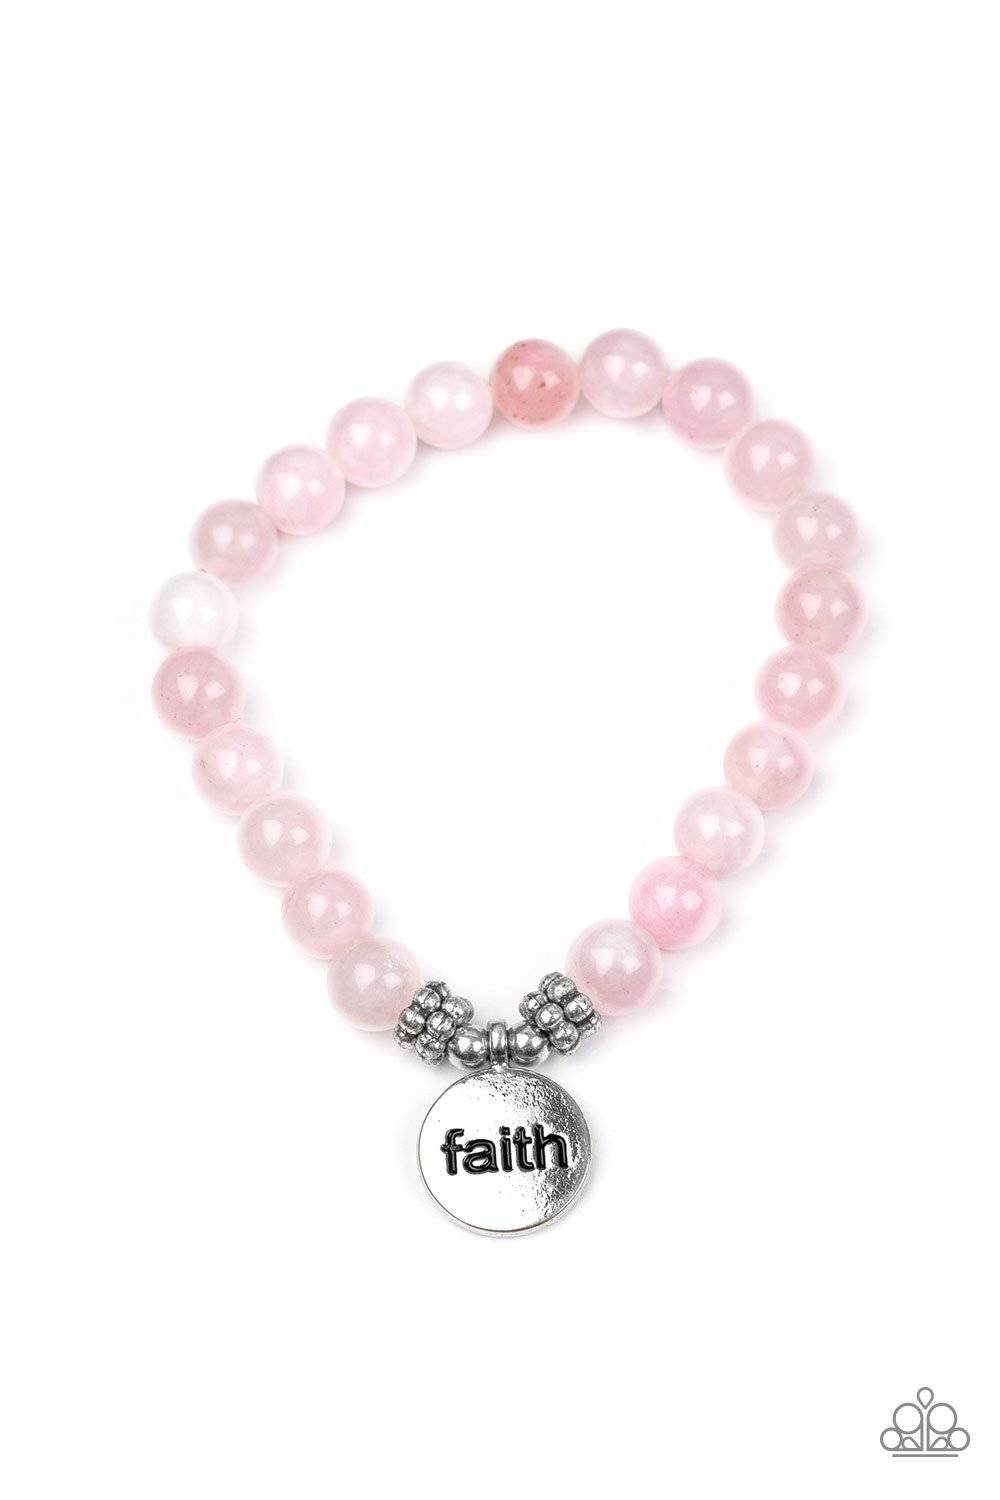 FAITH It, Till You Make It - Pink Stone "Faith" Bracelet - Paparazzi Accessories - GlaMarous Titi Jewels